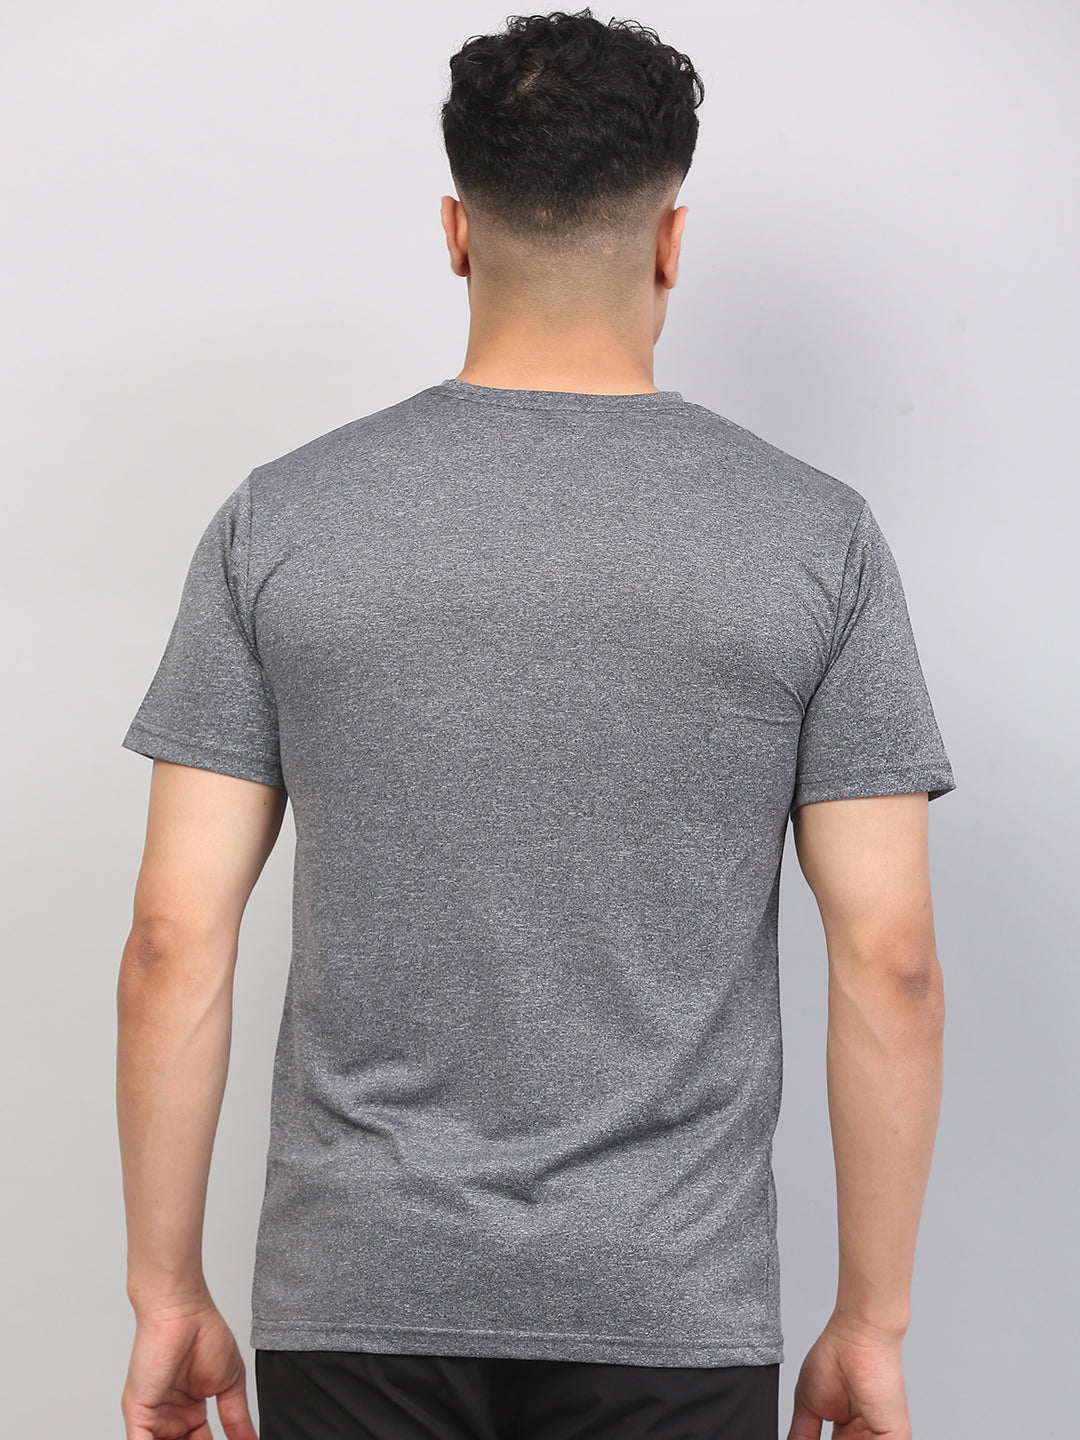 Men's Dryfit Panel T-Shirt